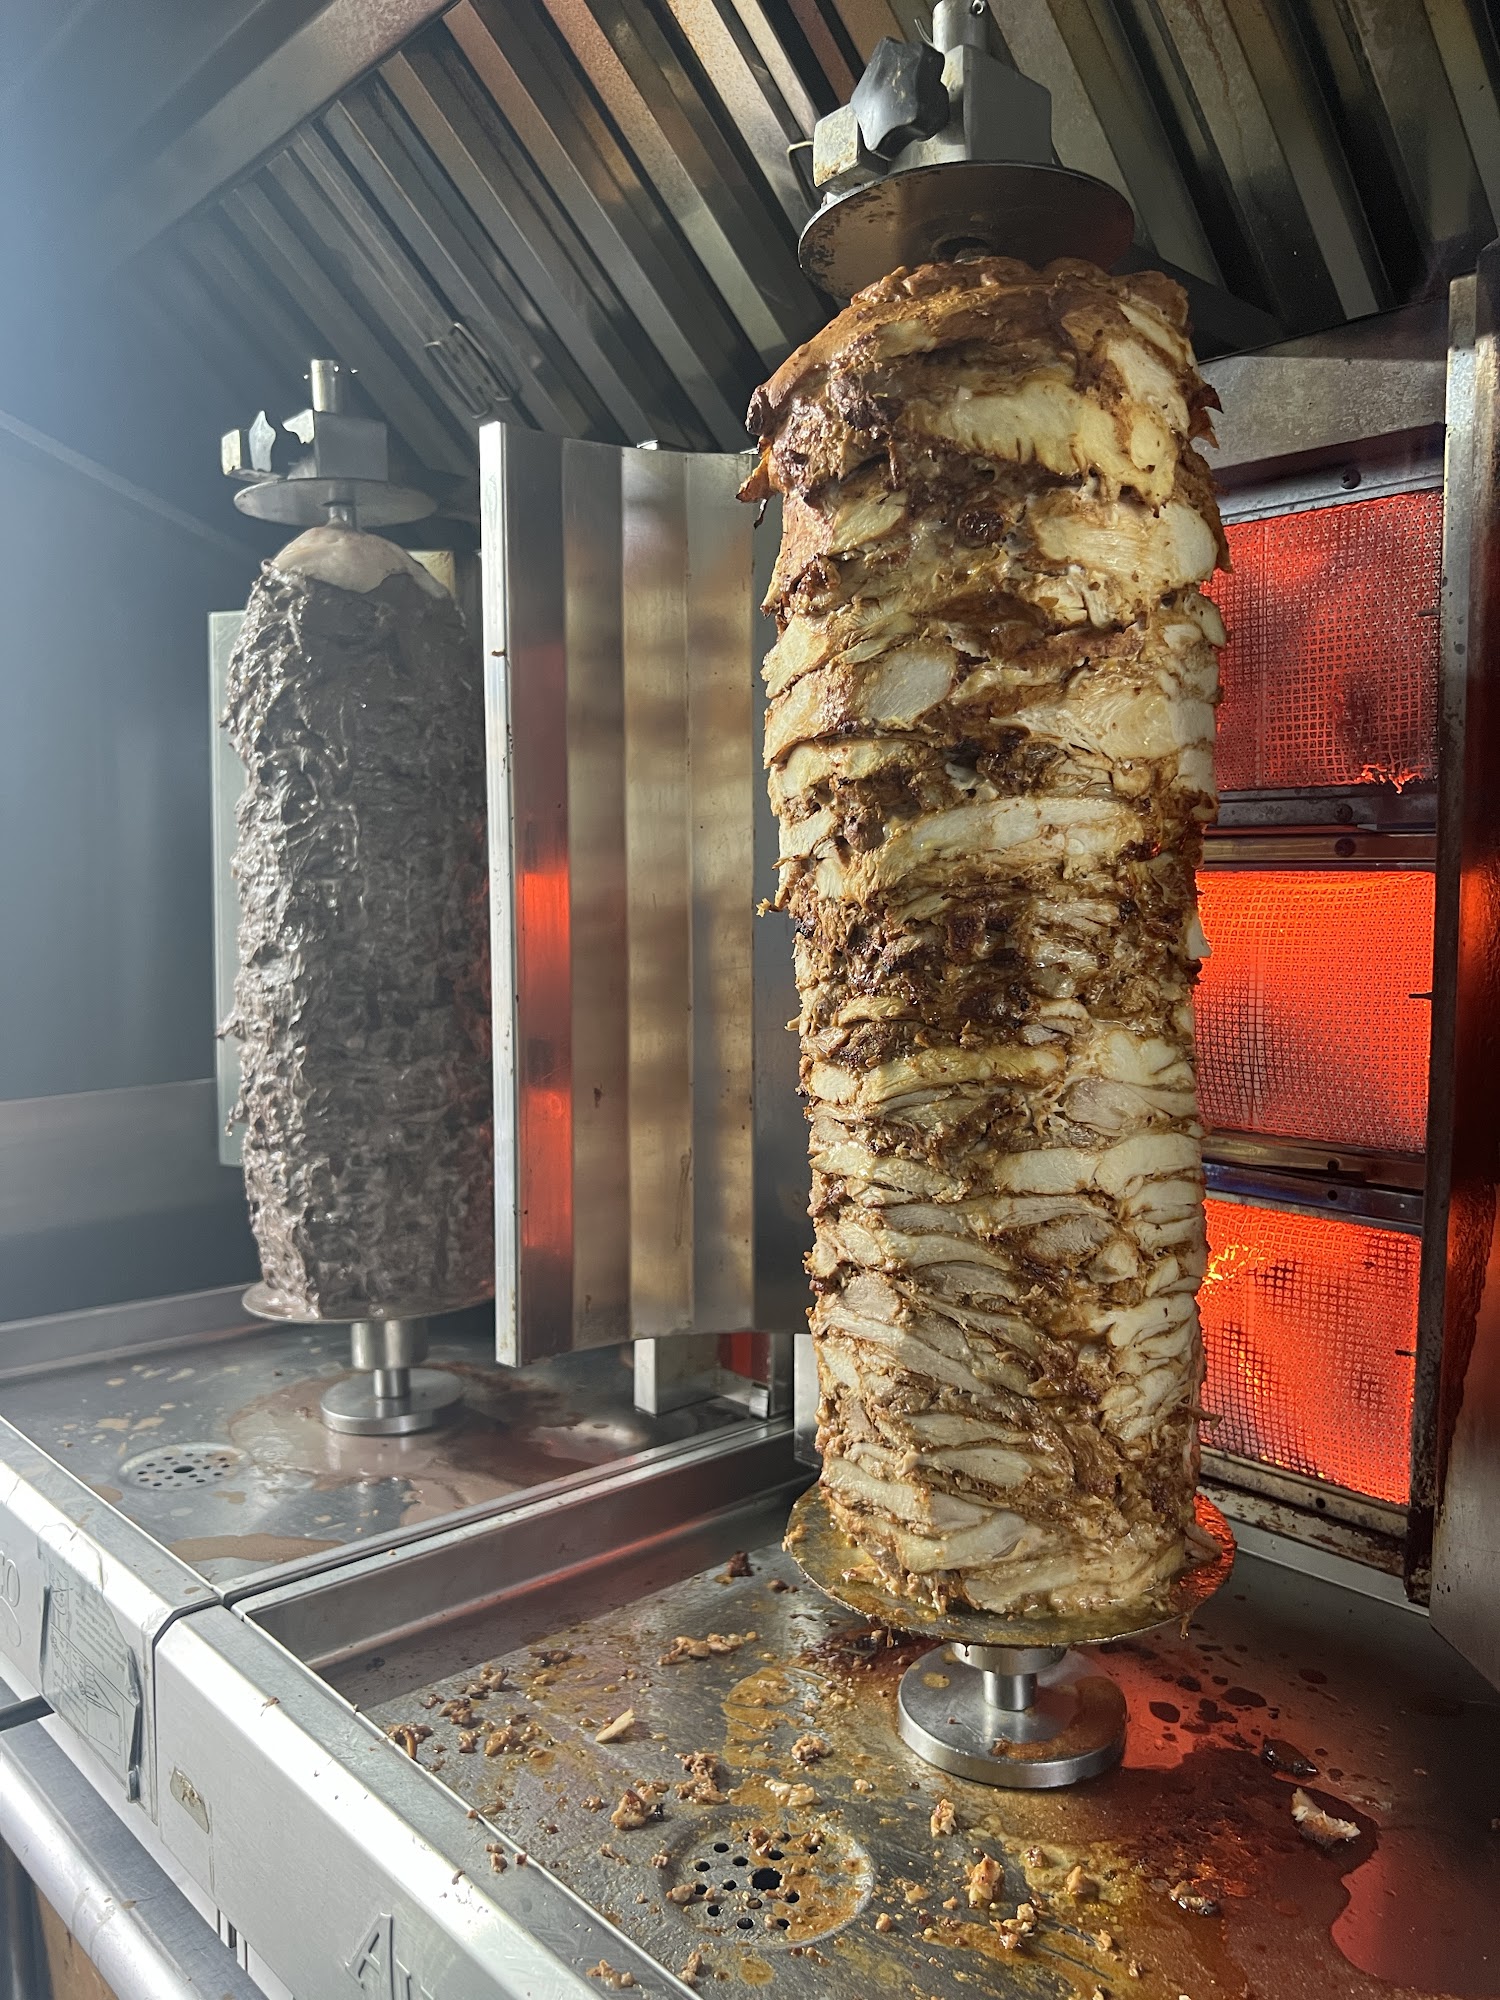 Shawarma alzaeem food truck